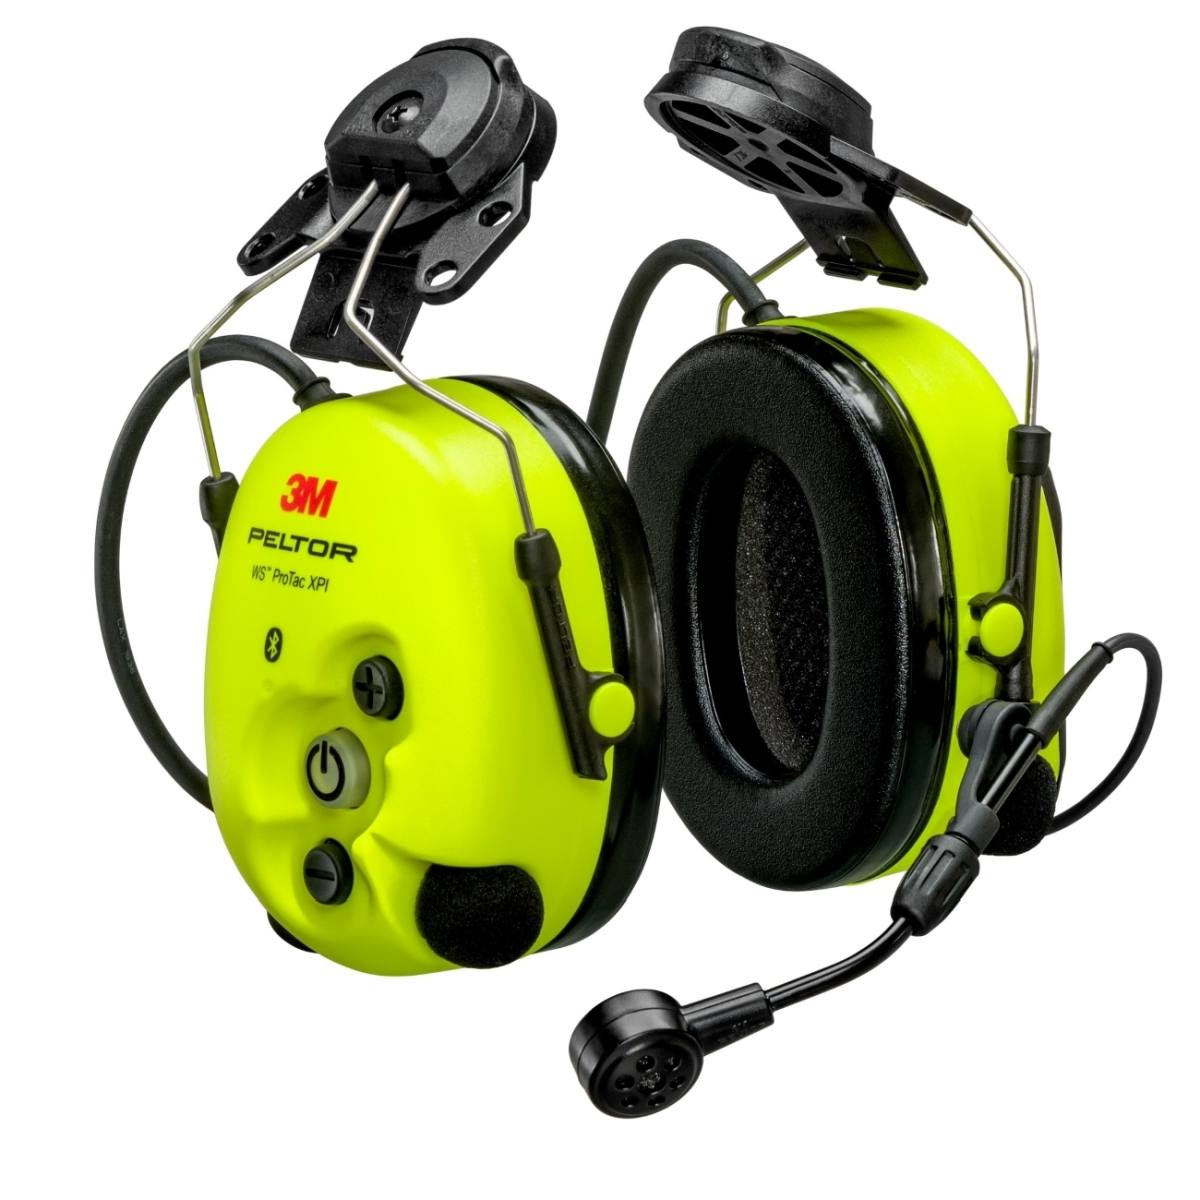 3M Peltor WS ProTac XPI Gehörschutz-Headset FLX2, Helmbefestigung, Bluetooth, gelb, MT15H7P3EWS6-111